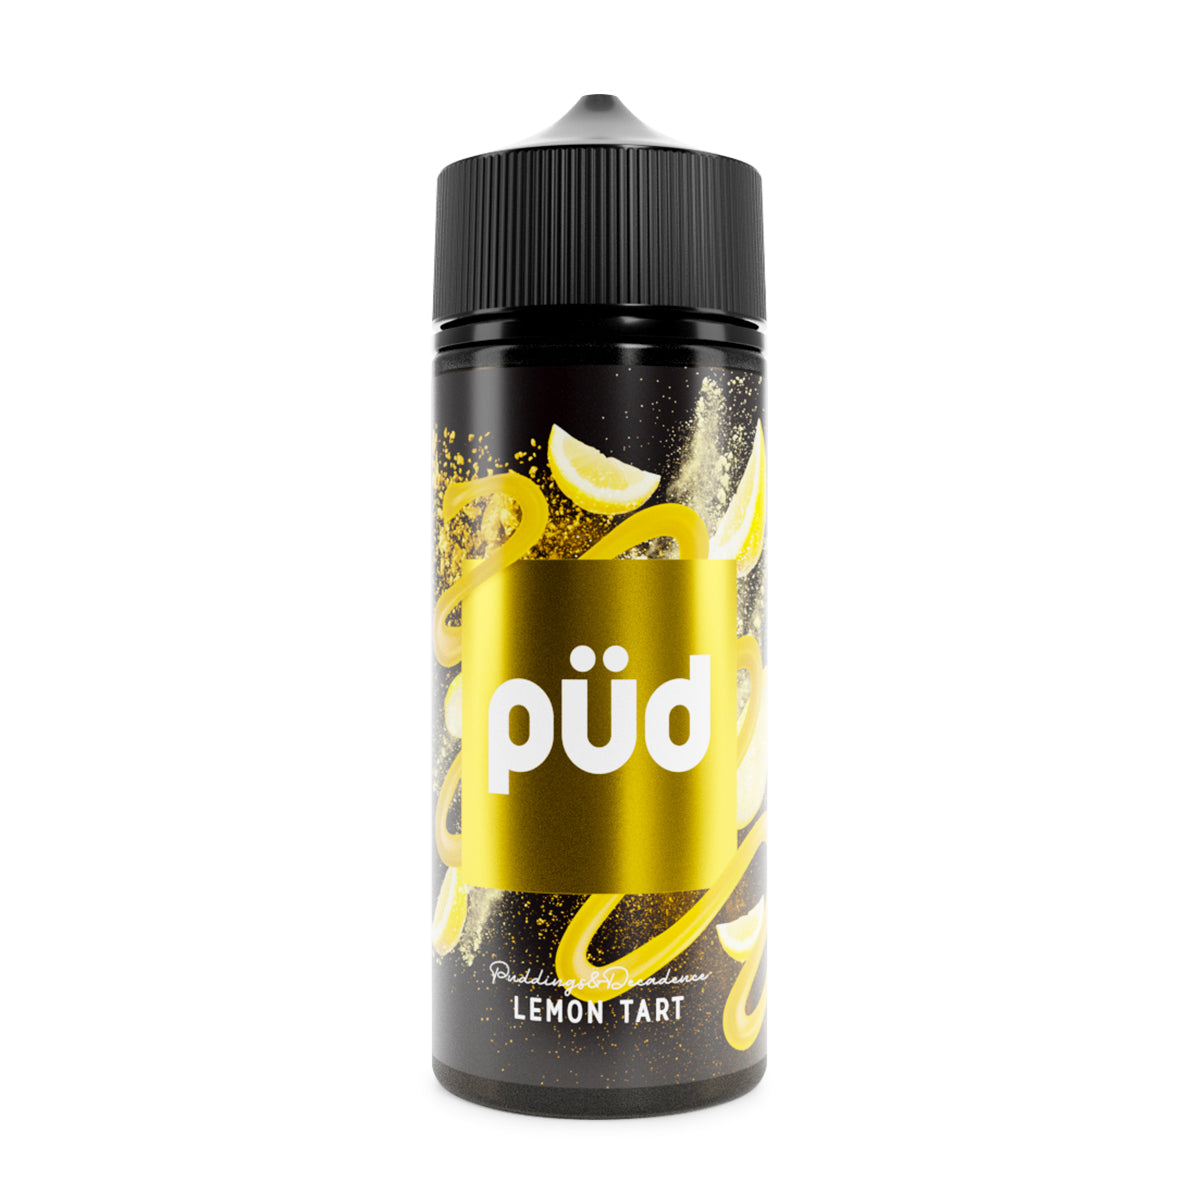 Pud Pudding & Decadence Lemon Tart 0mg 100ml Shortfill E-Liquid